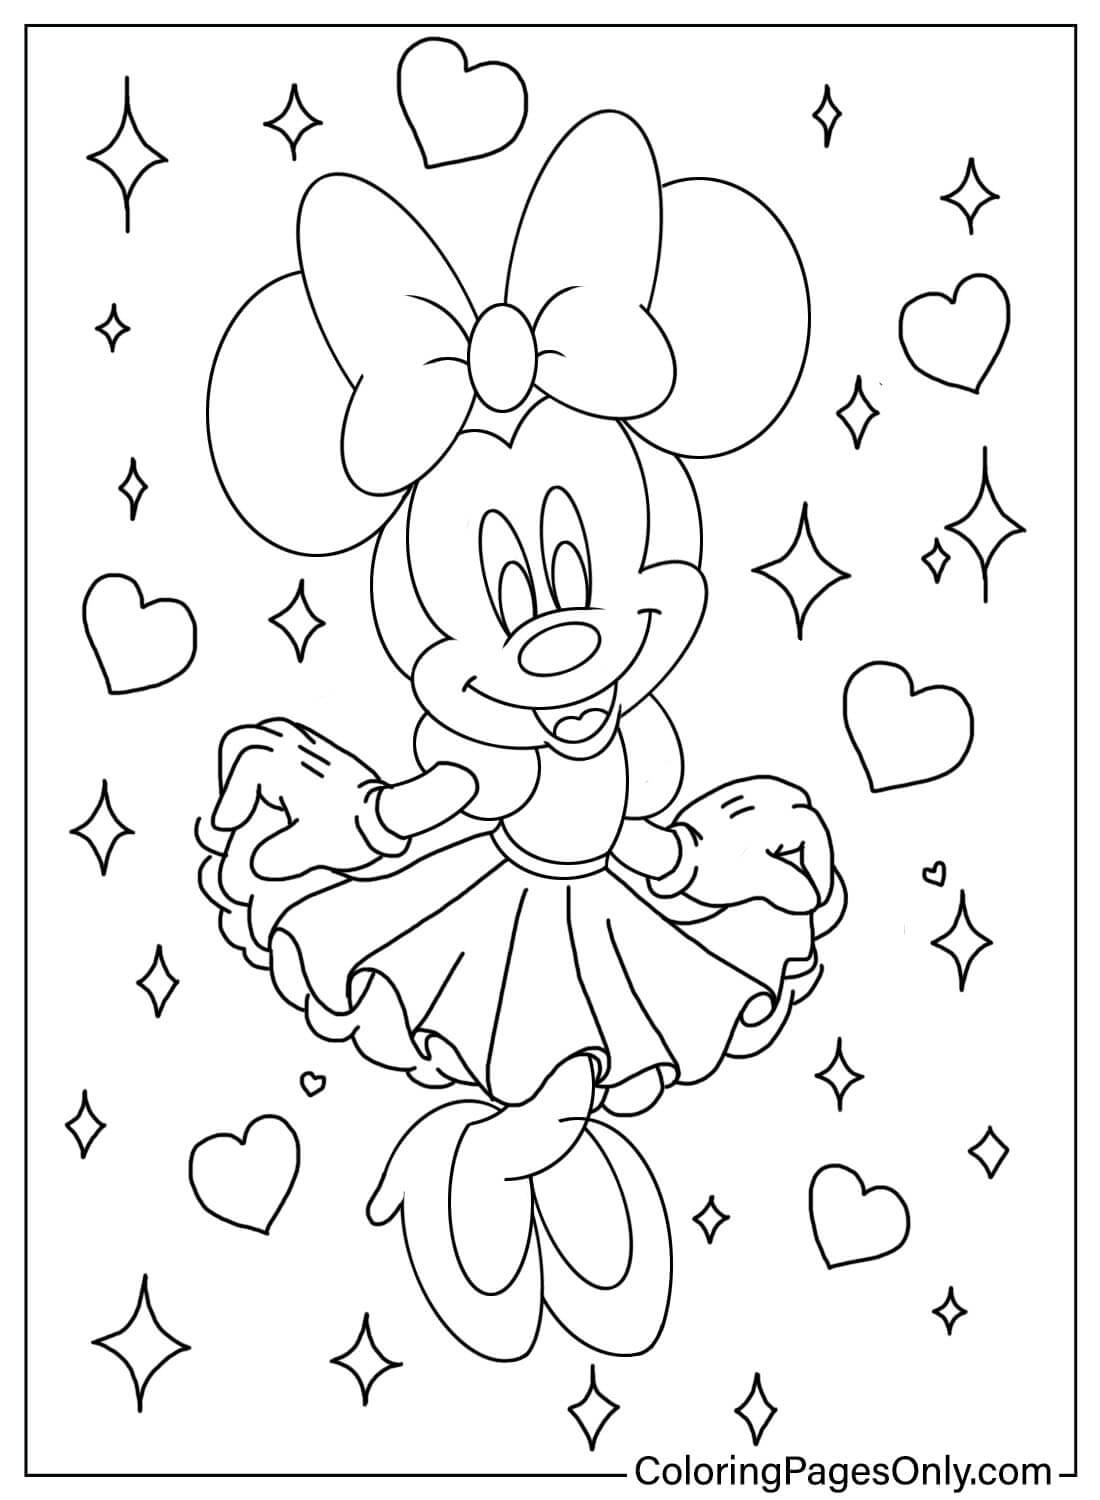 Página para colorir da Minnie Mouse da Minnie Mouse